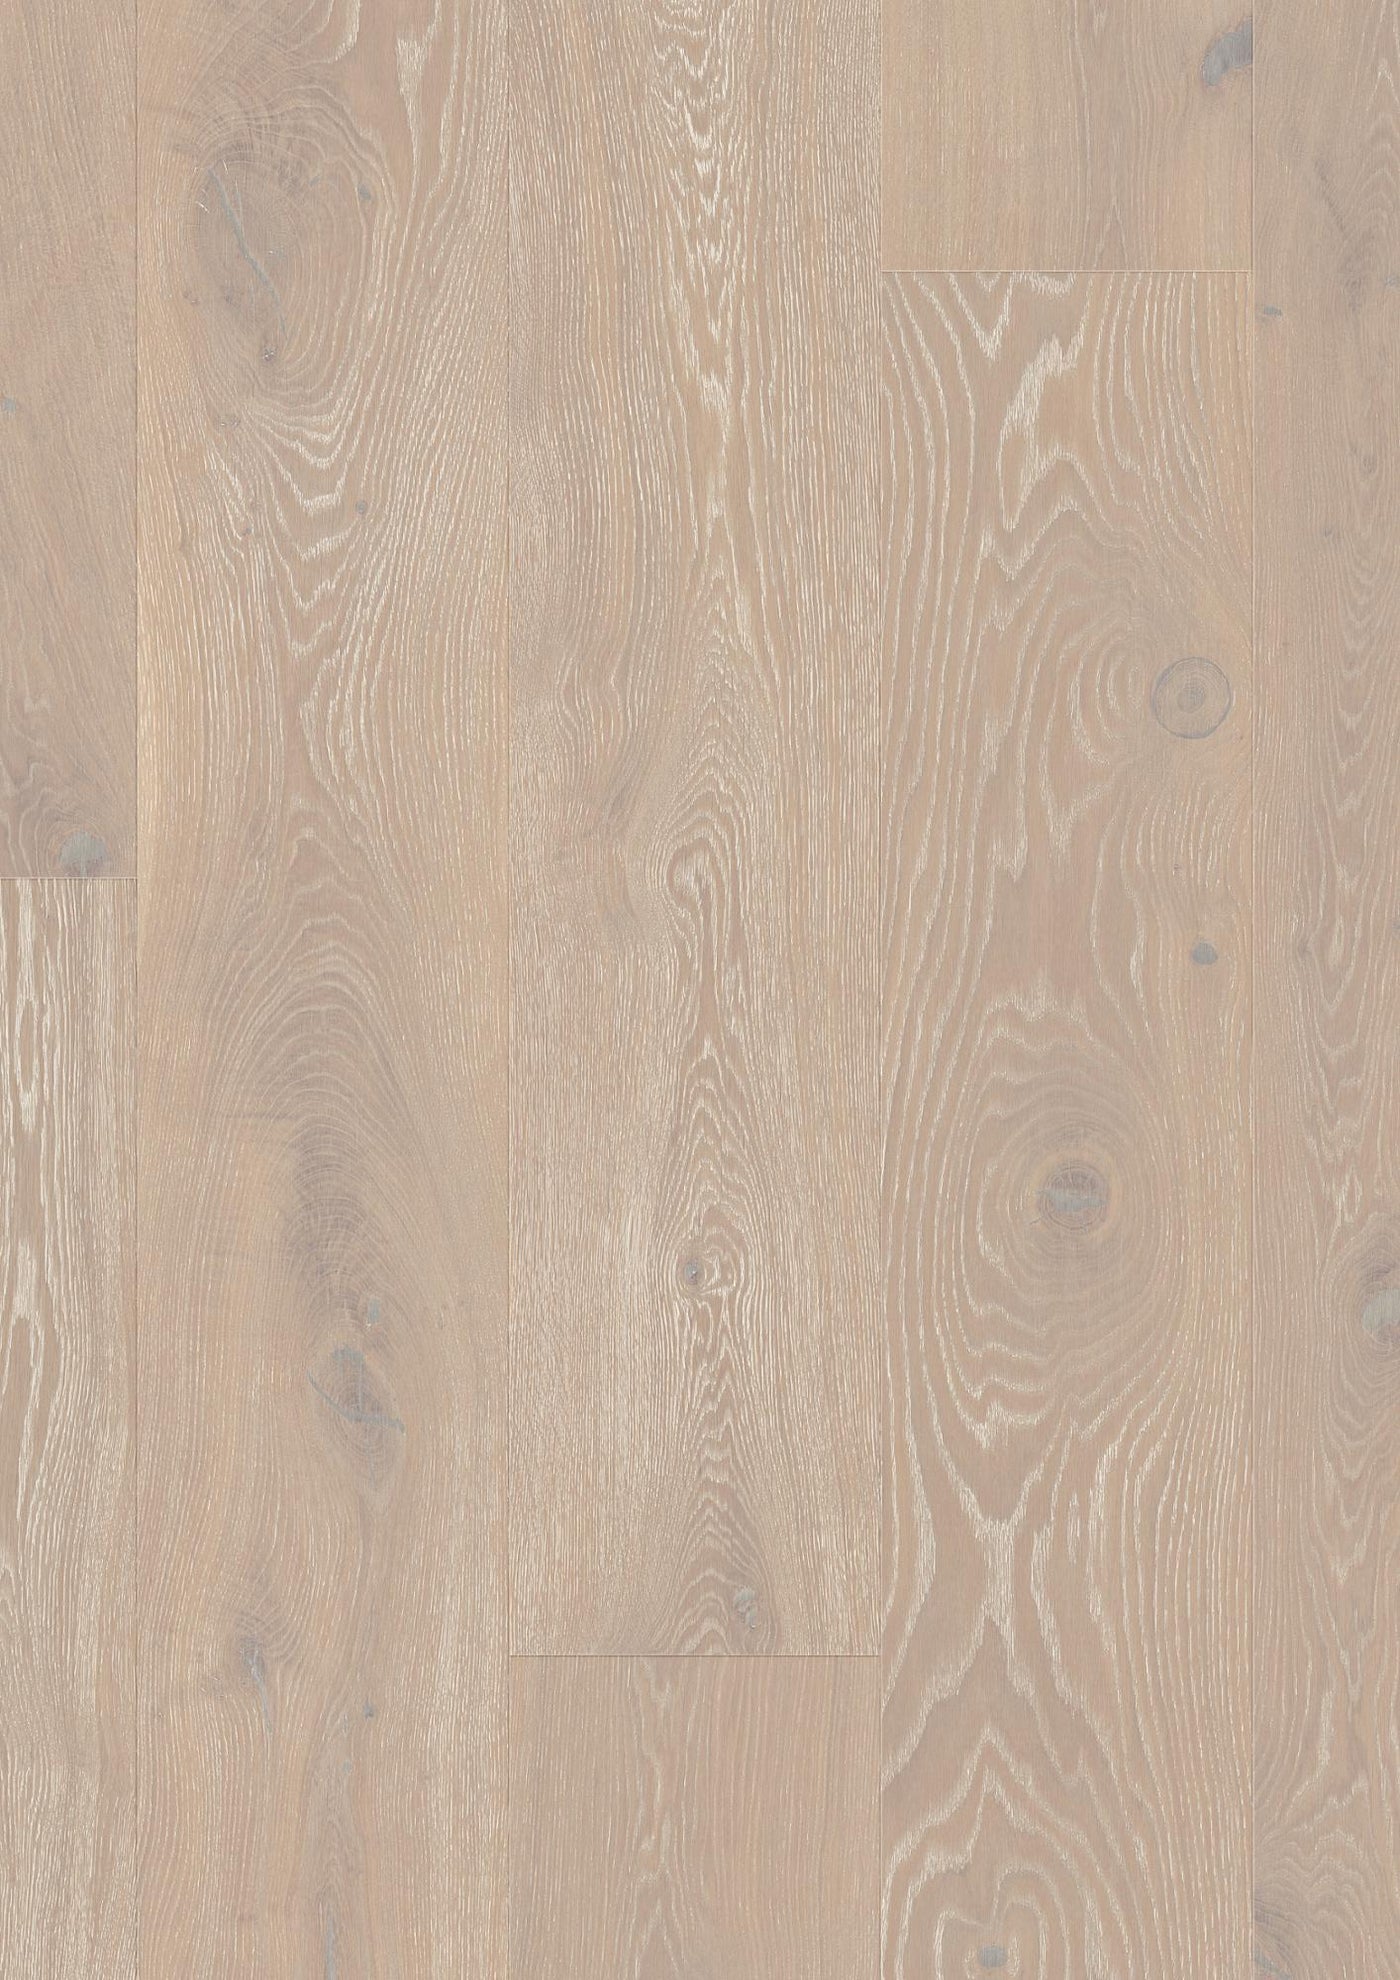 Boen Chaletino 11.75" x 108" Hardwood Plank